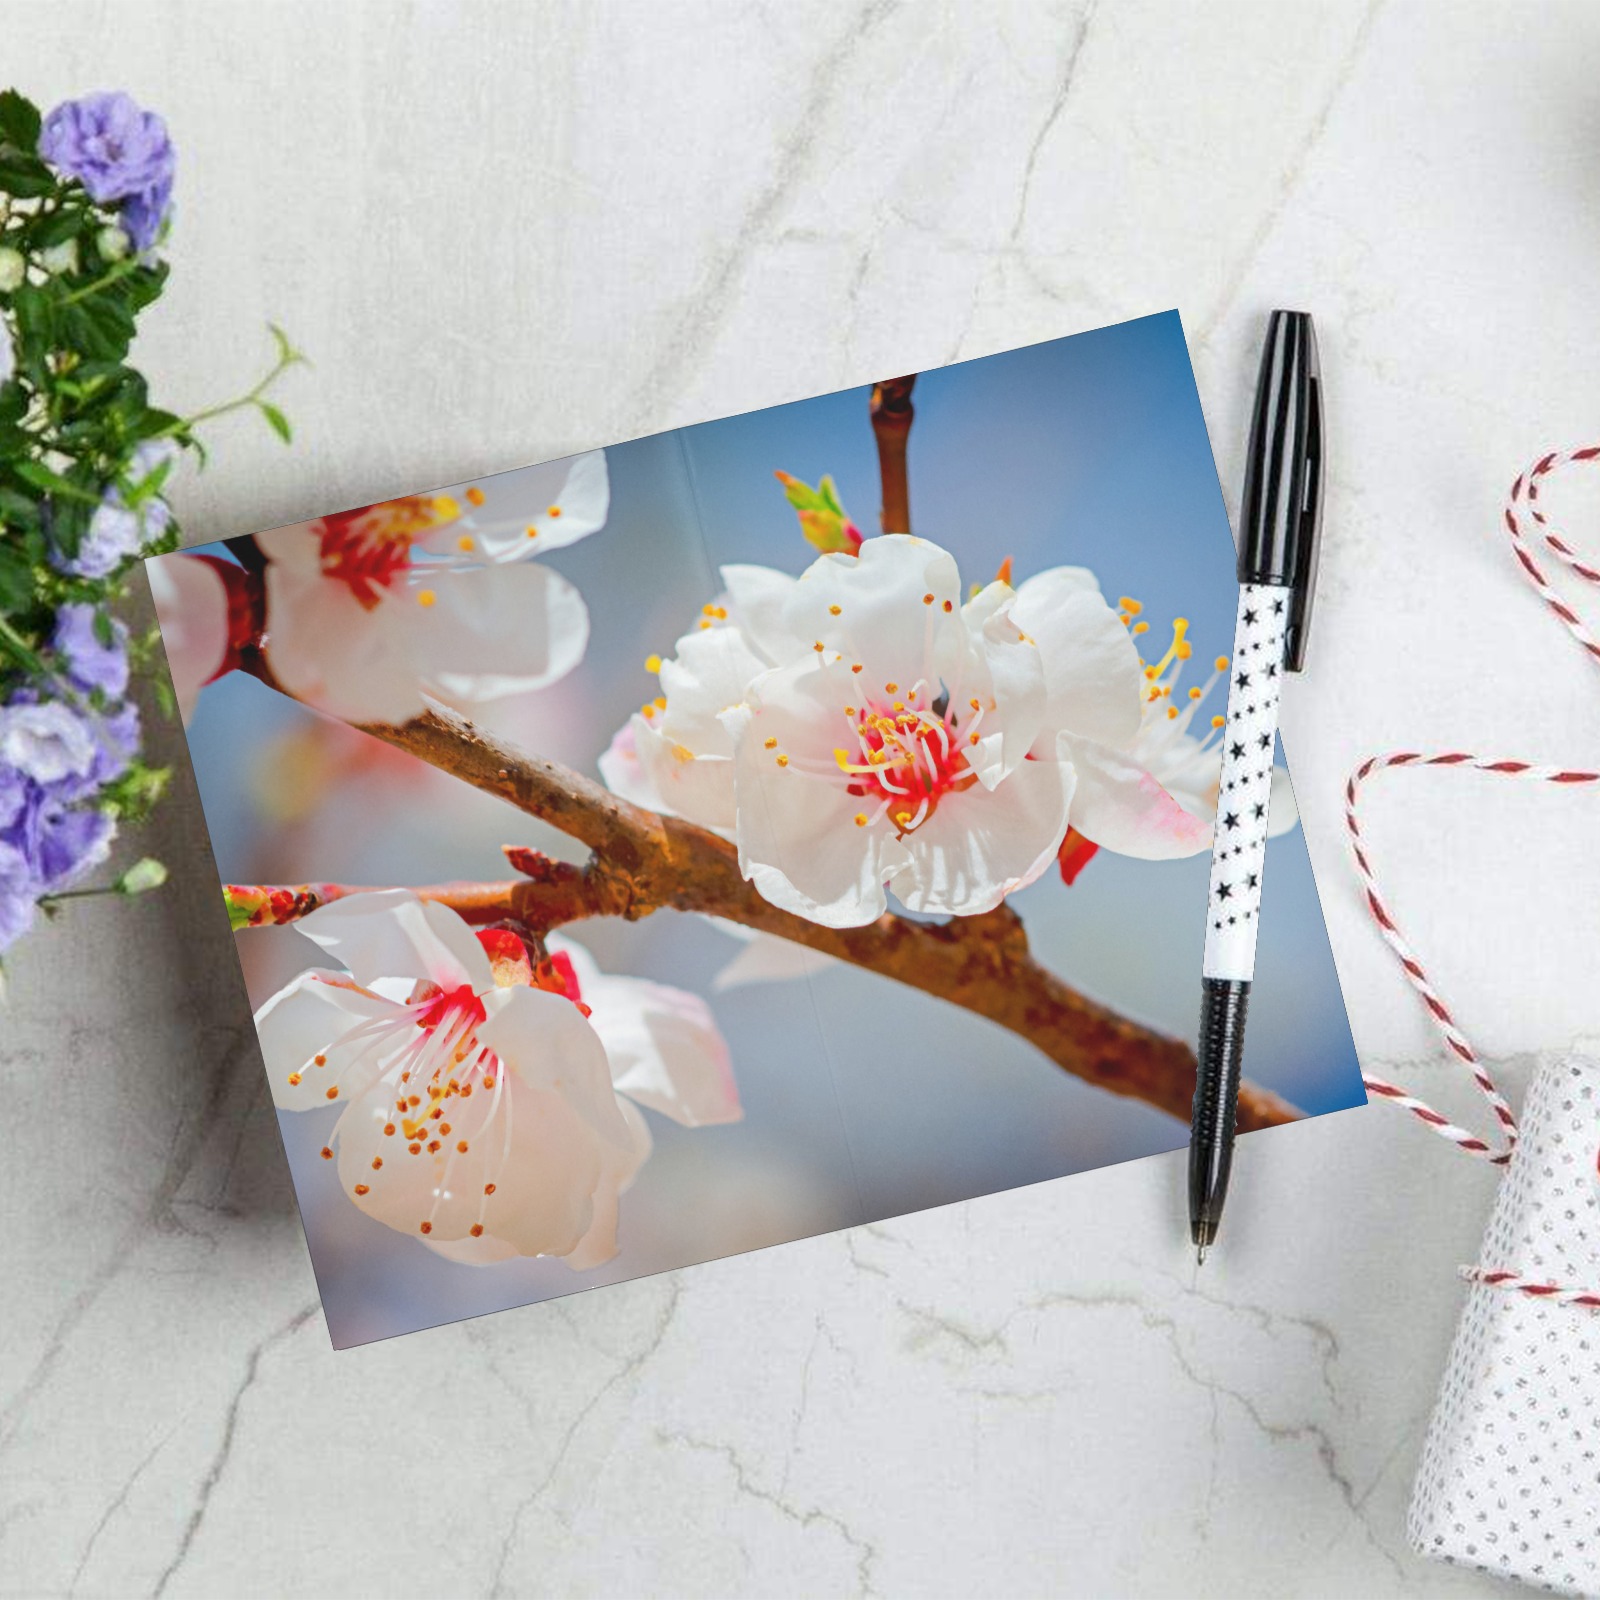 Japanese apricot flowers. Enjoy Hanami season. Greeting Card 8"x6"